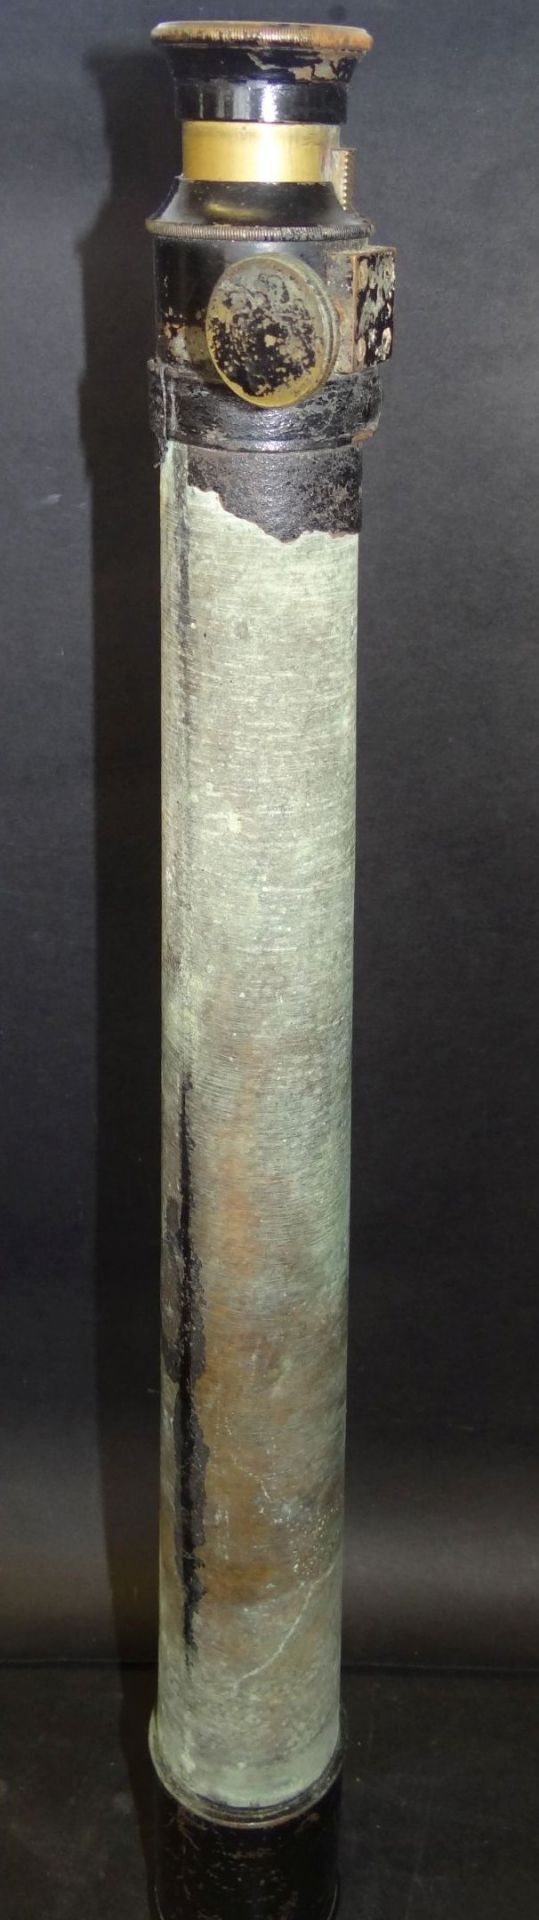 altes Fernrohr, Kupfer/Messing, schwarz lackiert, Lederhülle fehlt, L-ca. 70 cm, Alters-u.